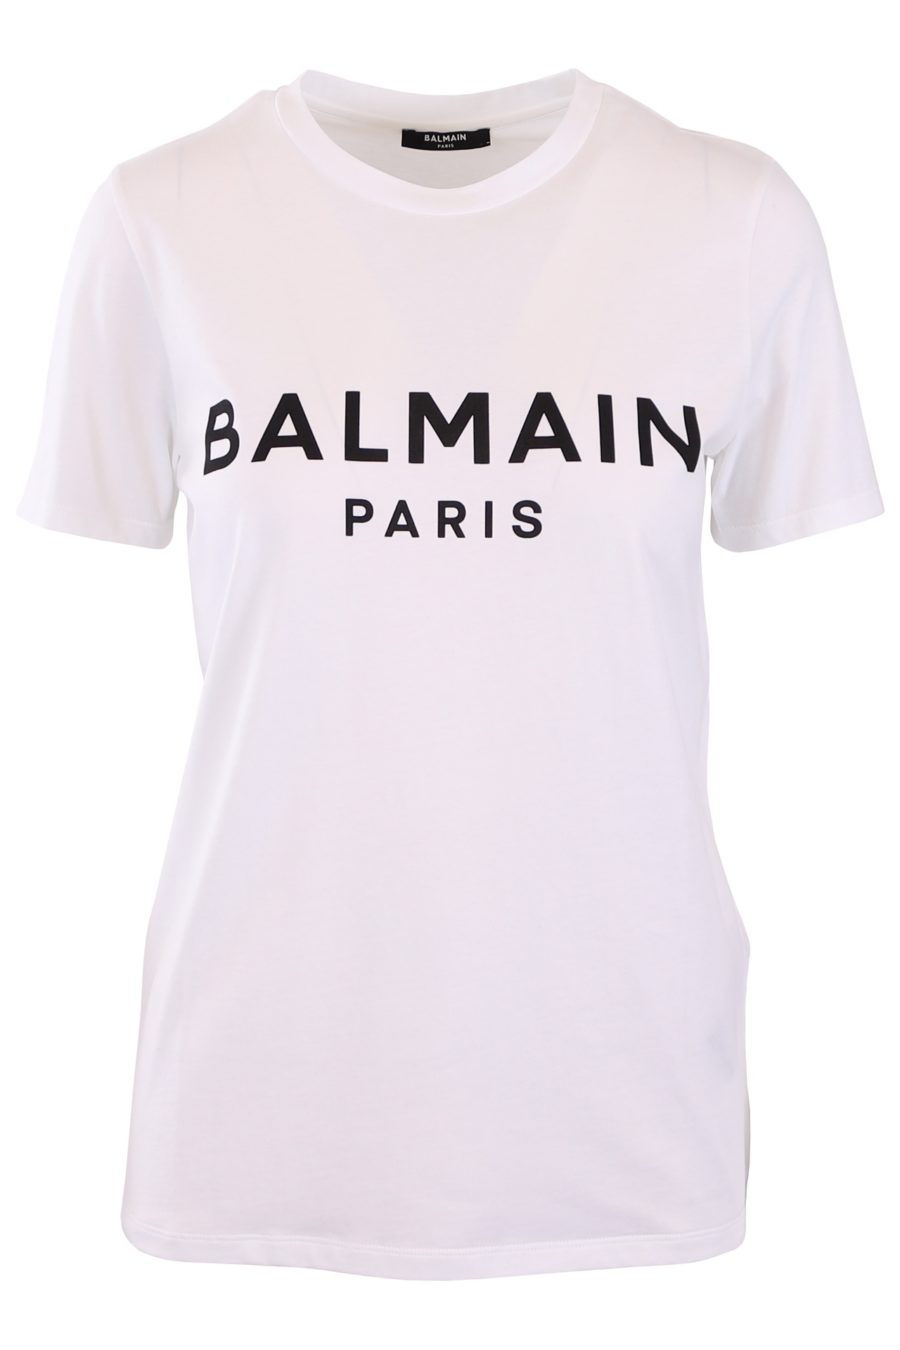 Balmain T-shirt blanc avec logo noir - 93efad166cc4ad1ac55b6782490799cc9546ce54